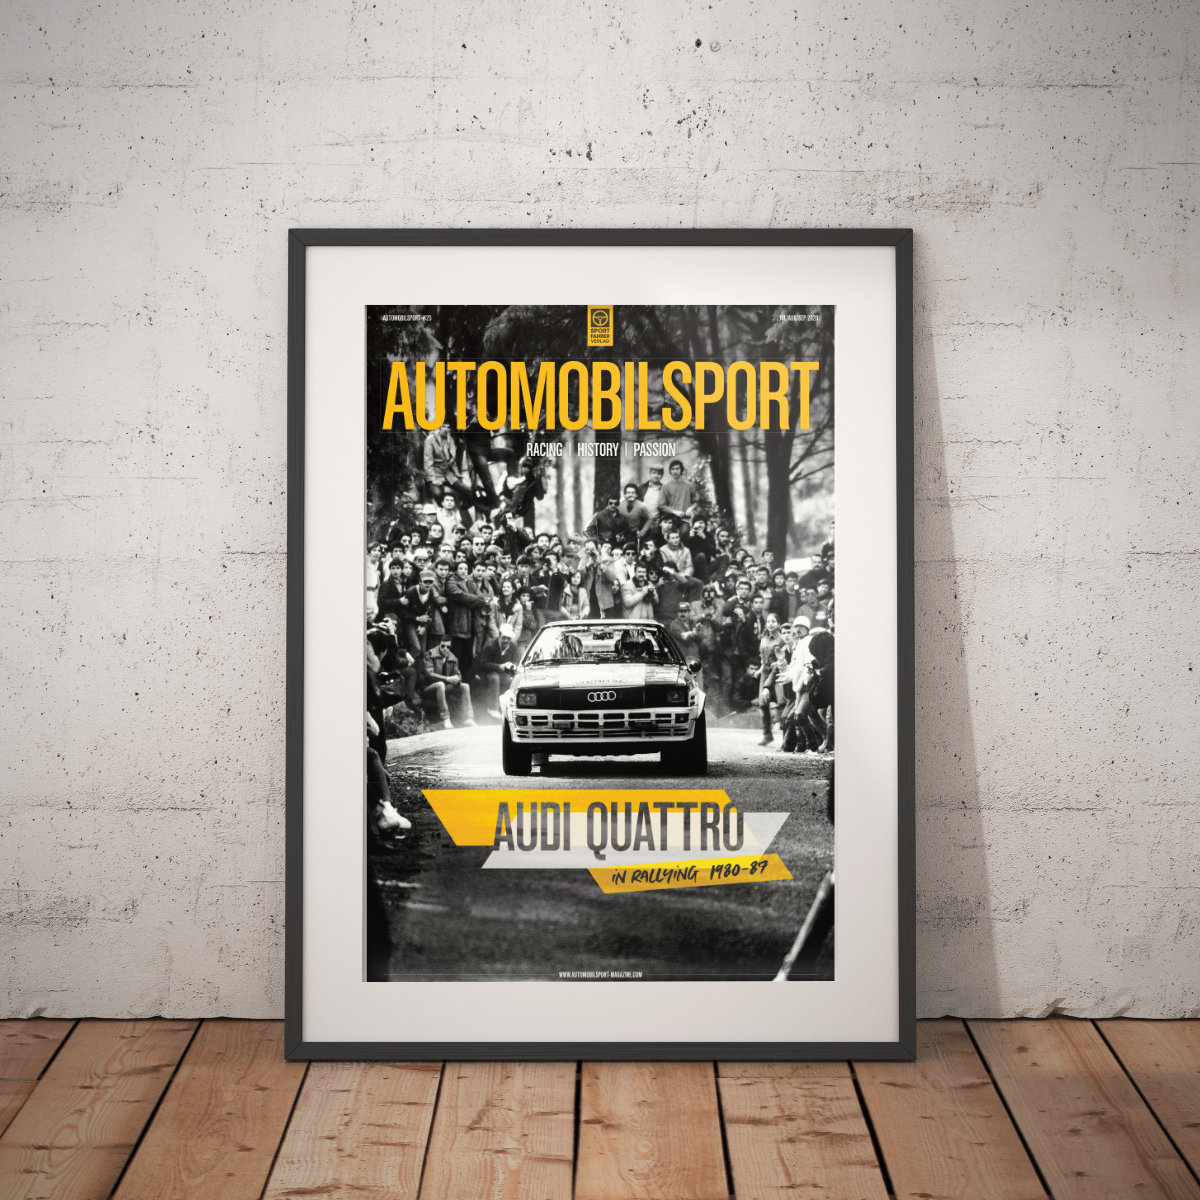 https://cdn.sportfahrer-zentrale.com/media/image/14/d8/4c/AUTOMOBILSPORT-25-Poster-front-framed.jpg